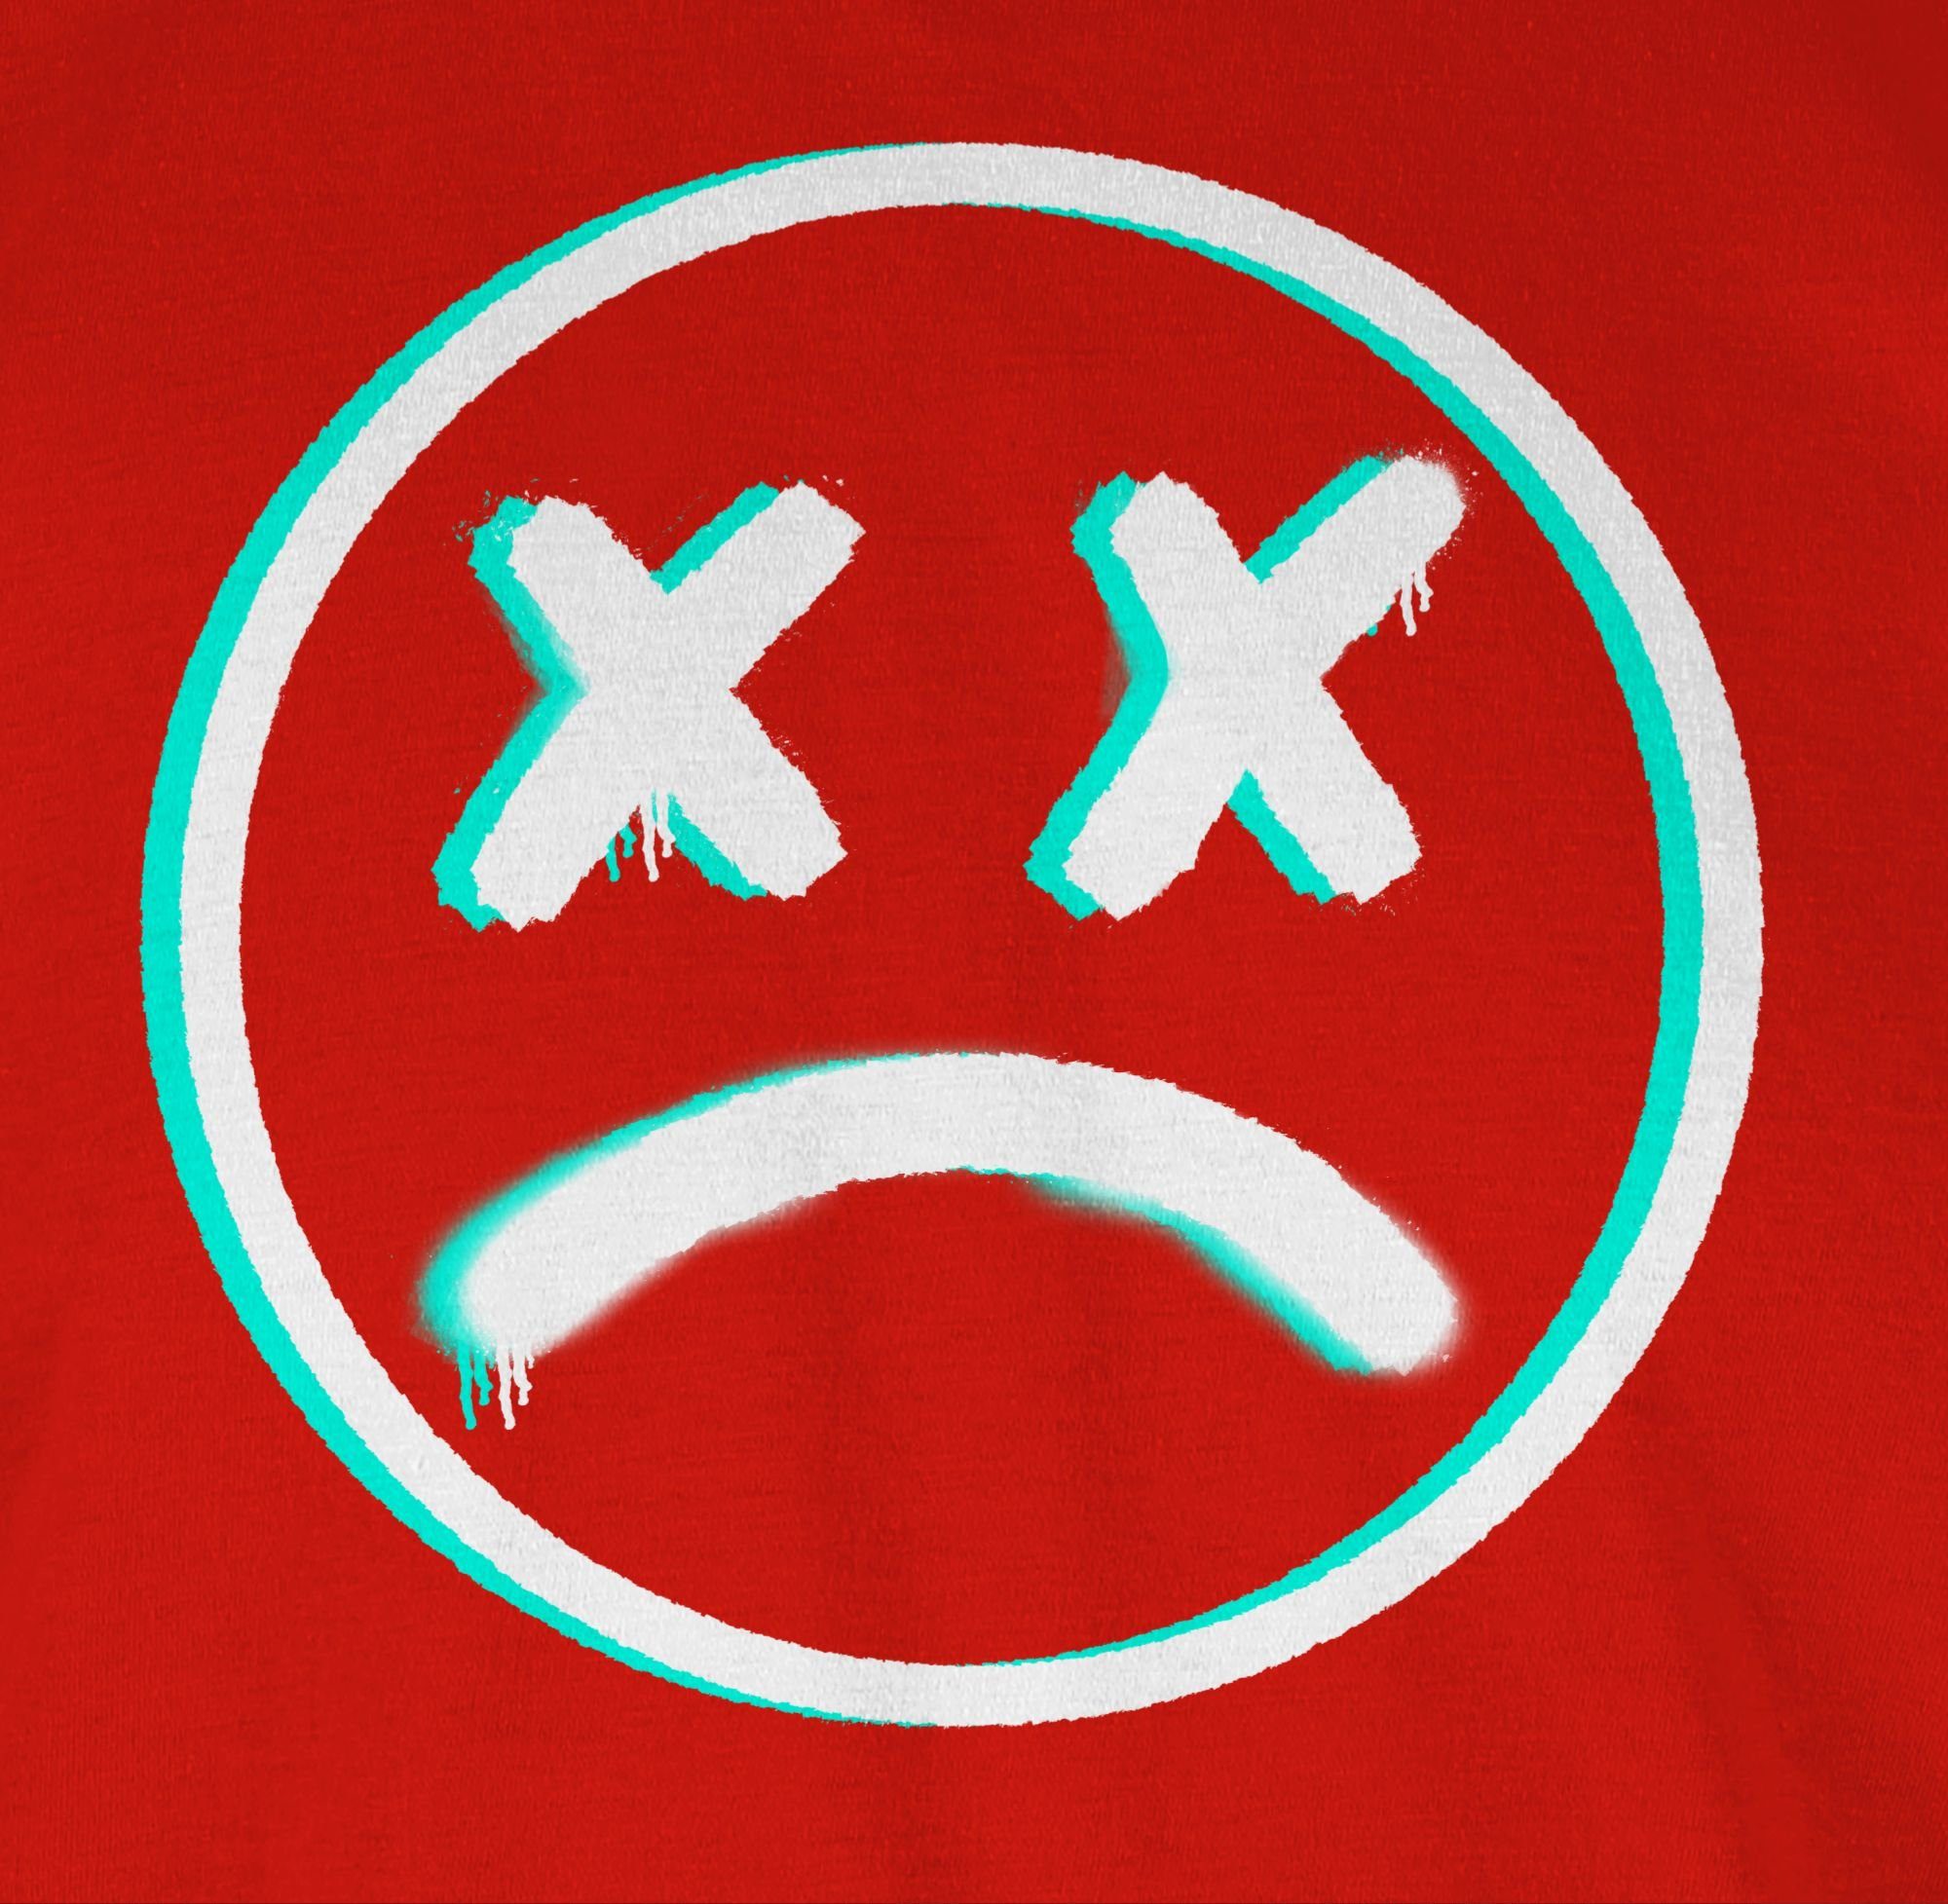 Rot Shirtracer Glitch T-Shirt Smiley Trauriges Geschenke Nerd 03 Face